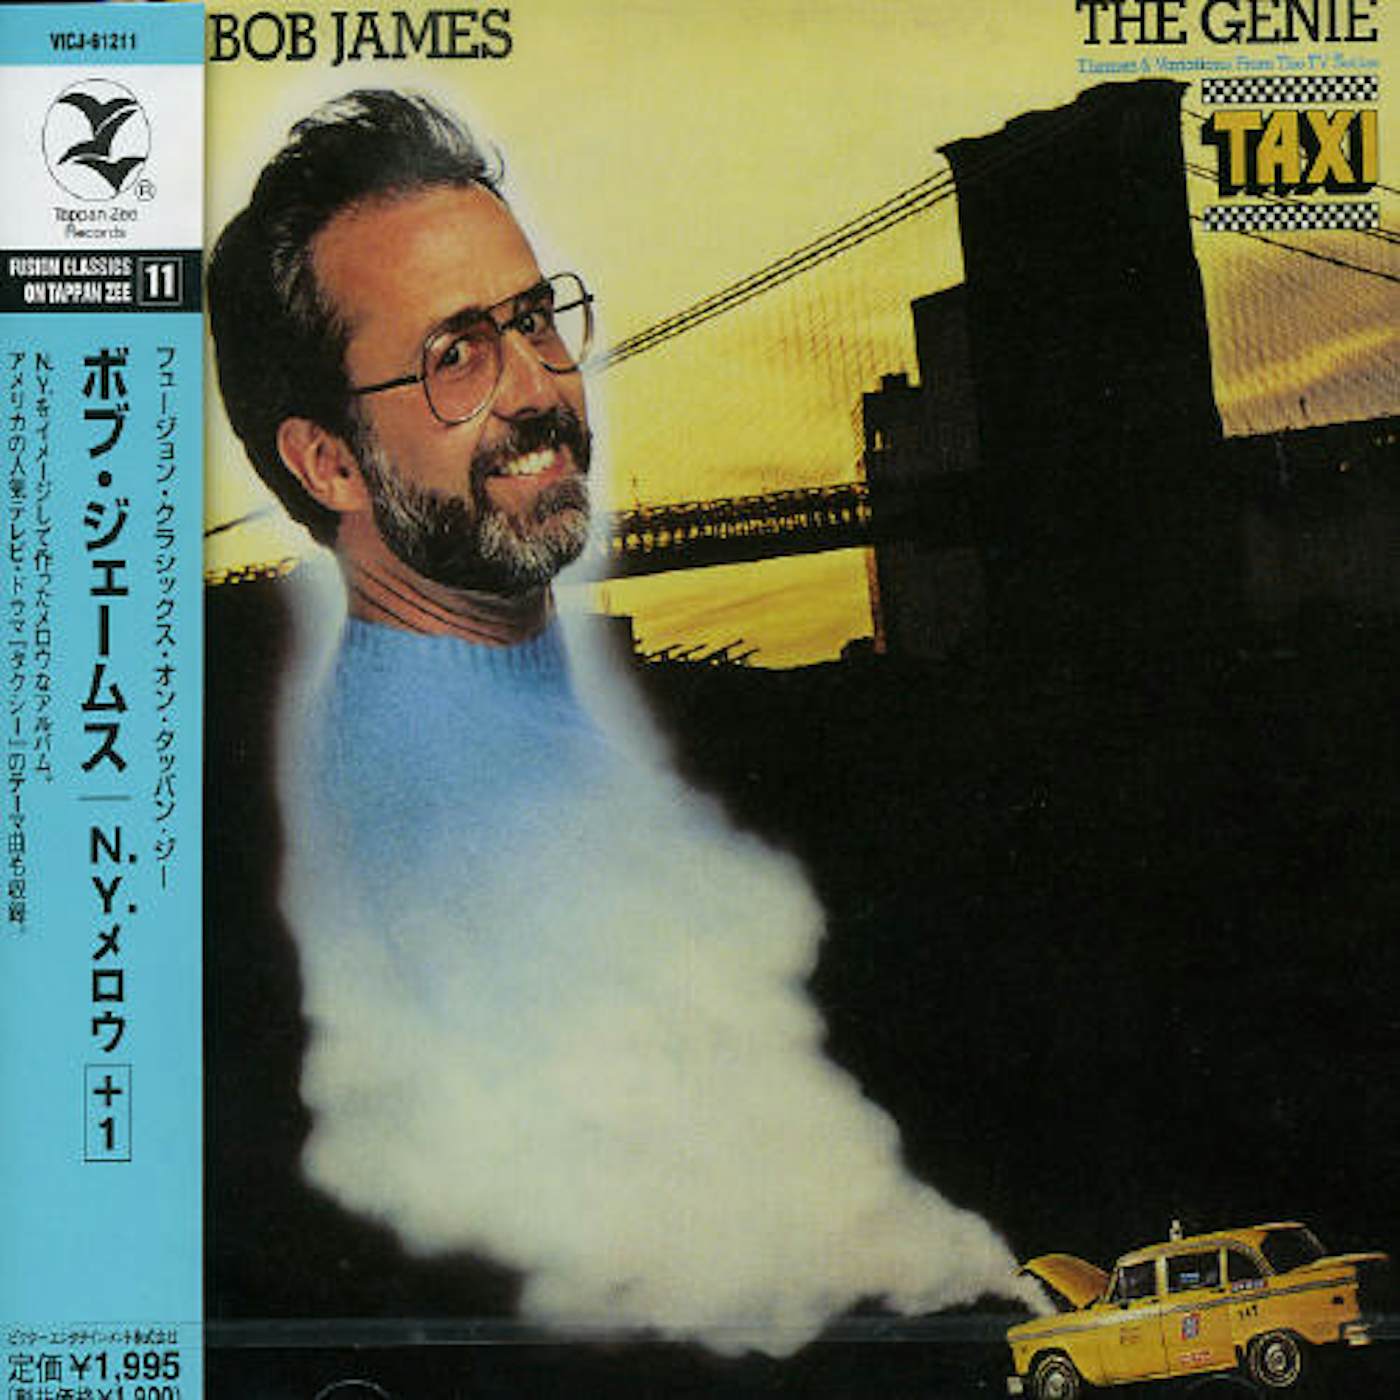 Bob James GENIE+1 CD